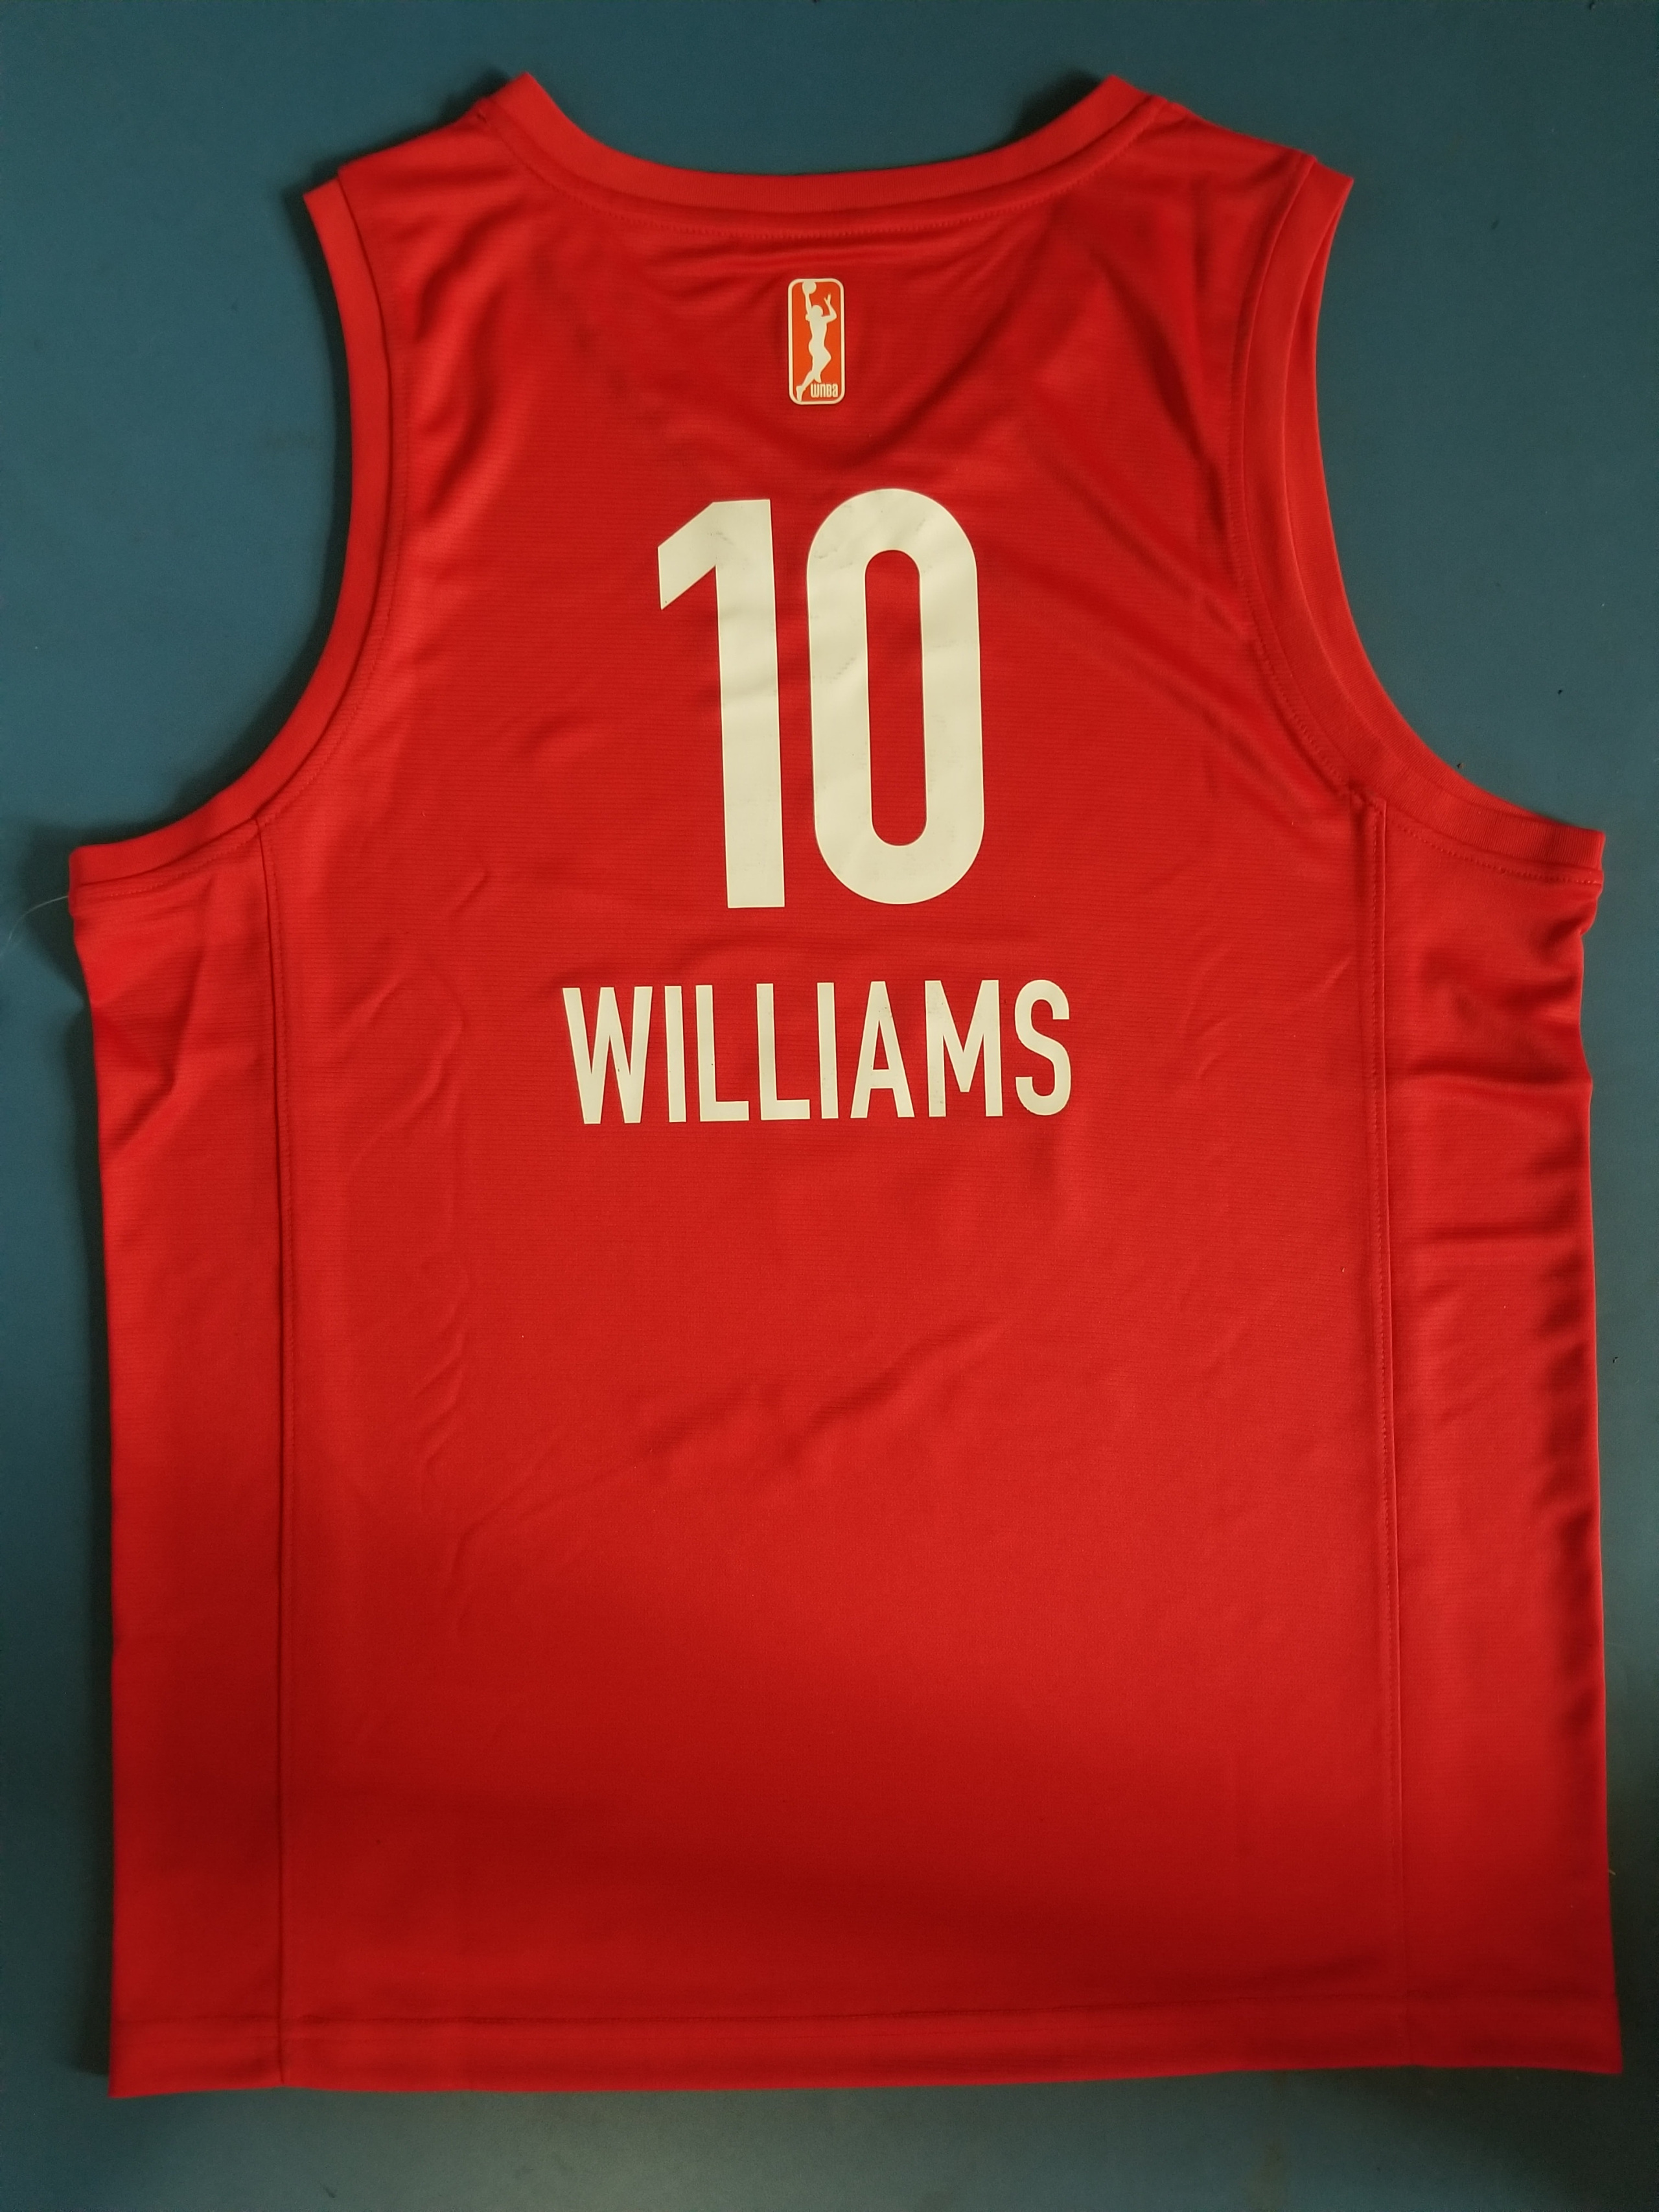 courtney williams jersey